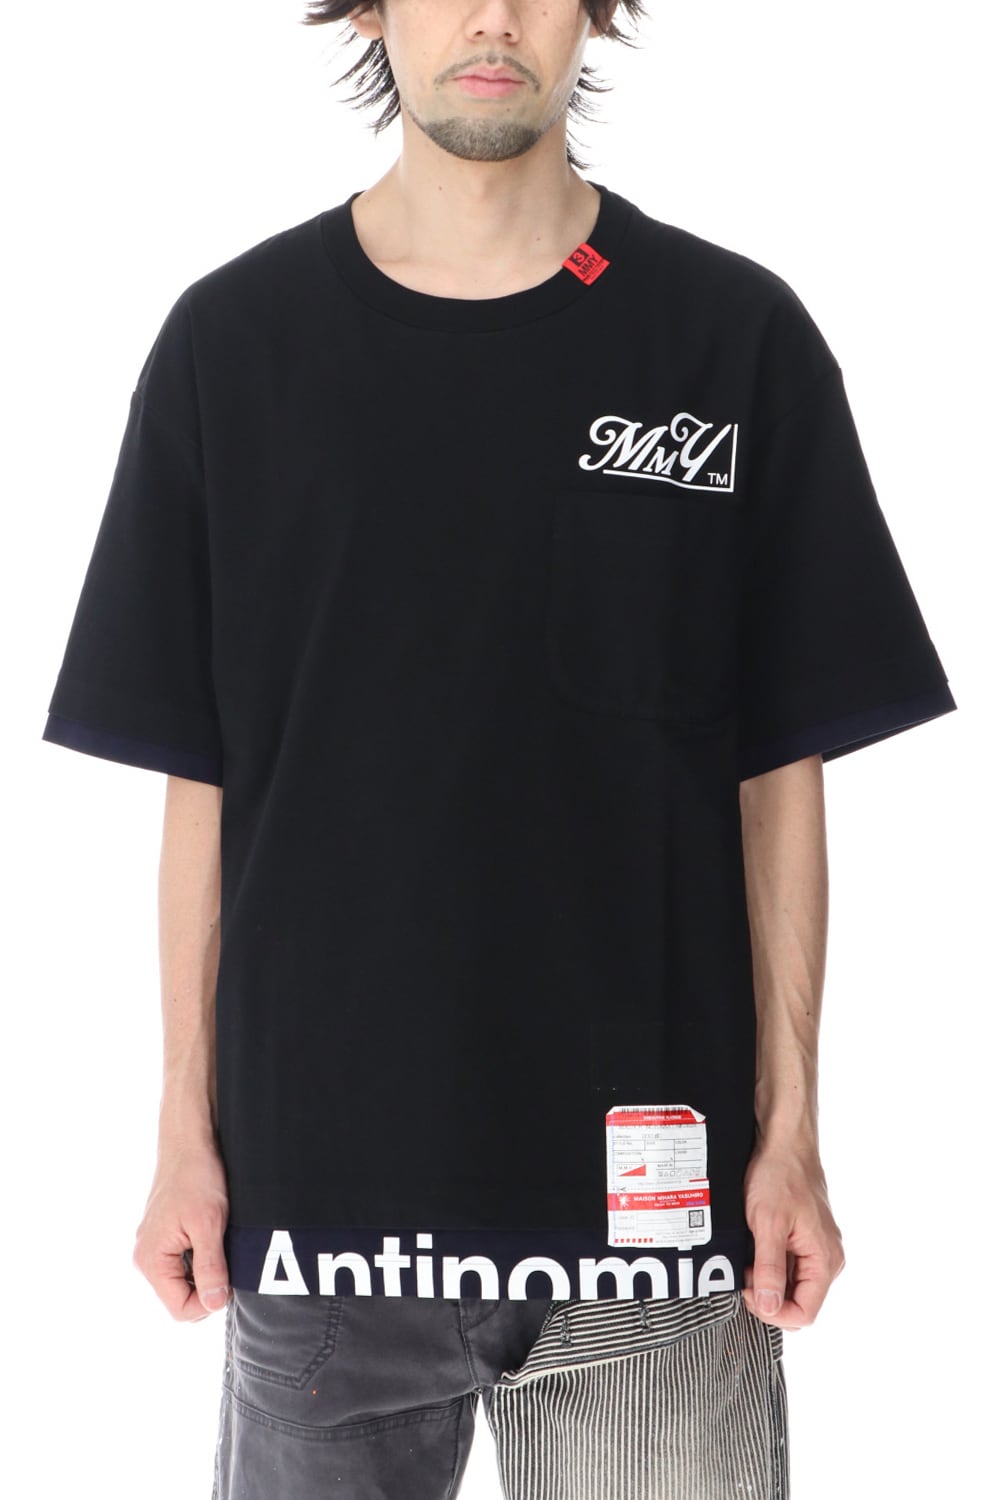 A06TS661-Black | レイヤード Tシャツ Black | MIHARAYASUHIRO | 通販